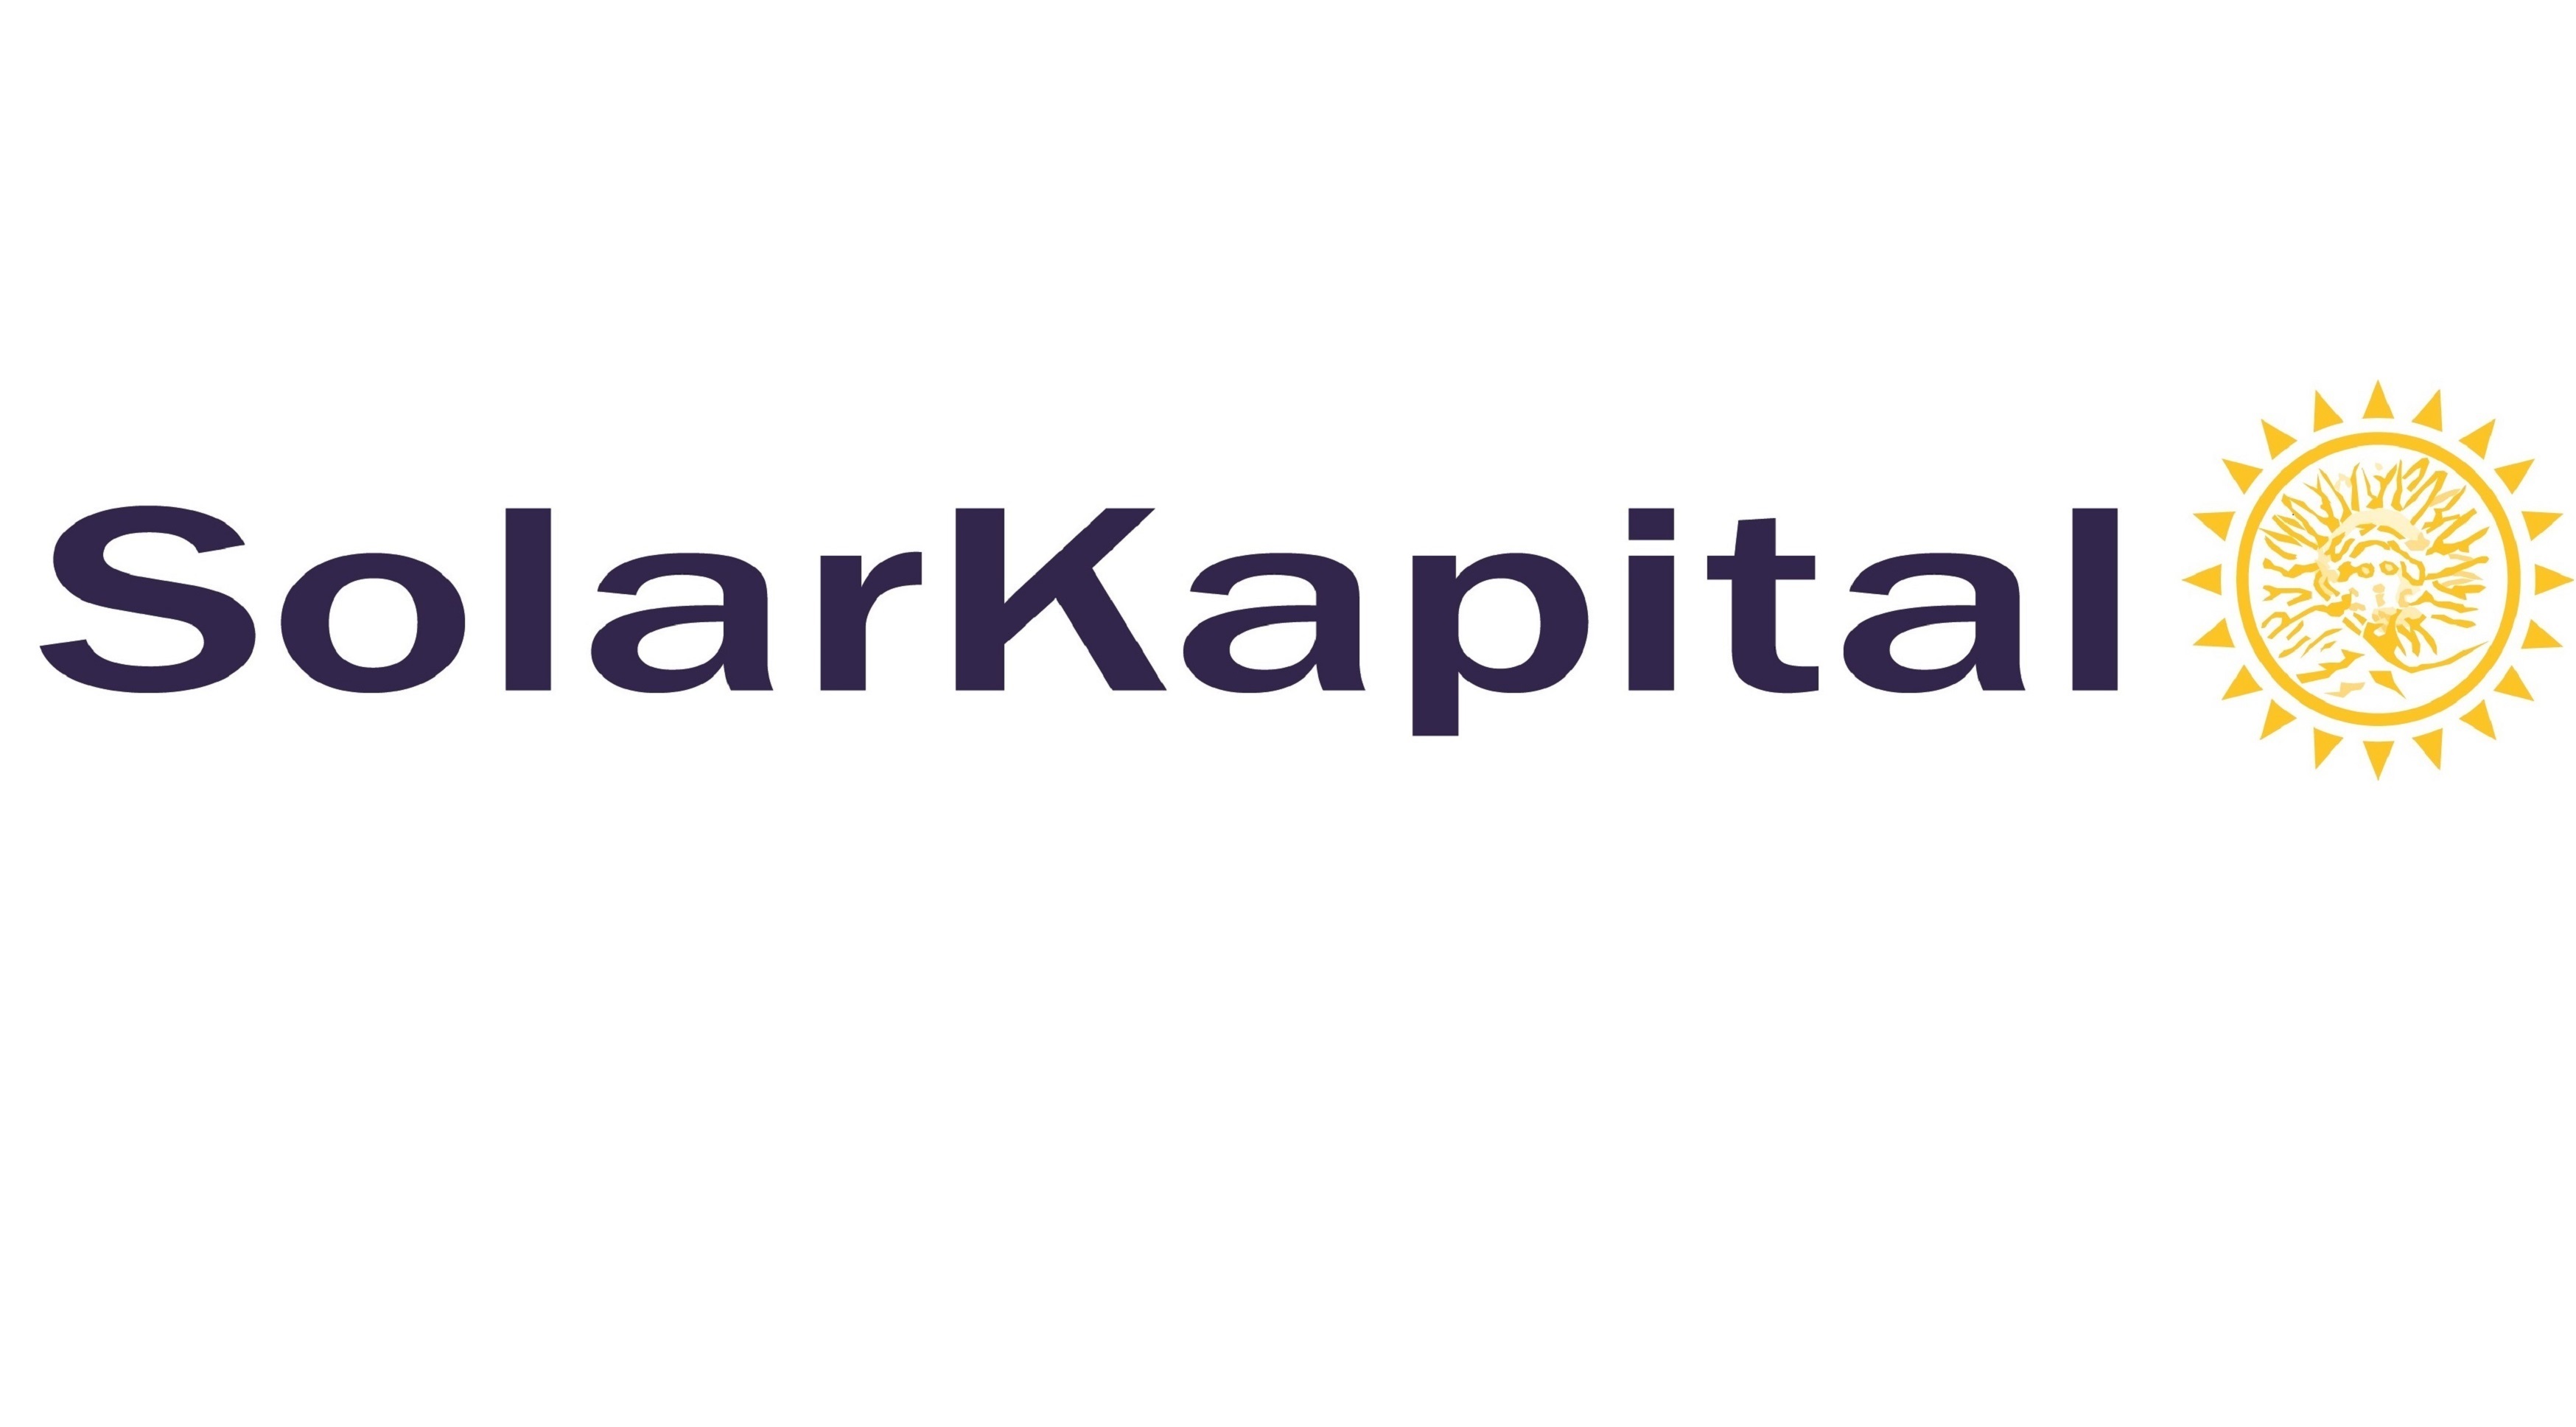 15.03.2016 - H ομάδα της SolarKapital συνεχίζει να μεγαλώνει